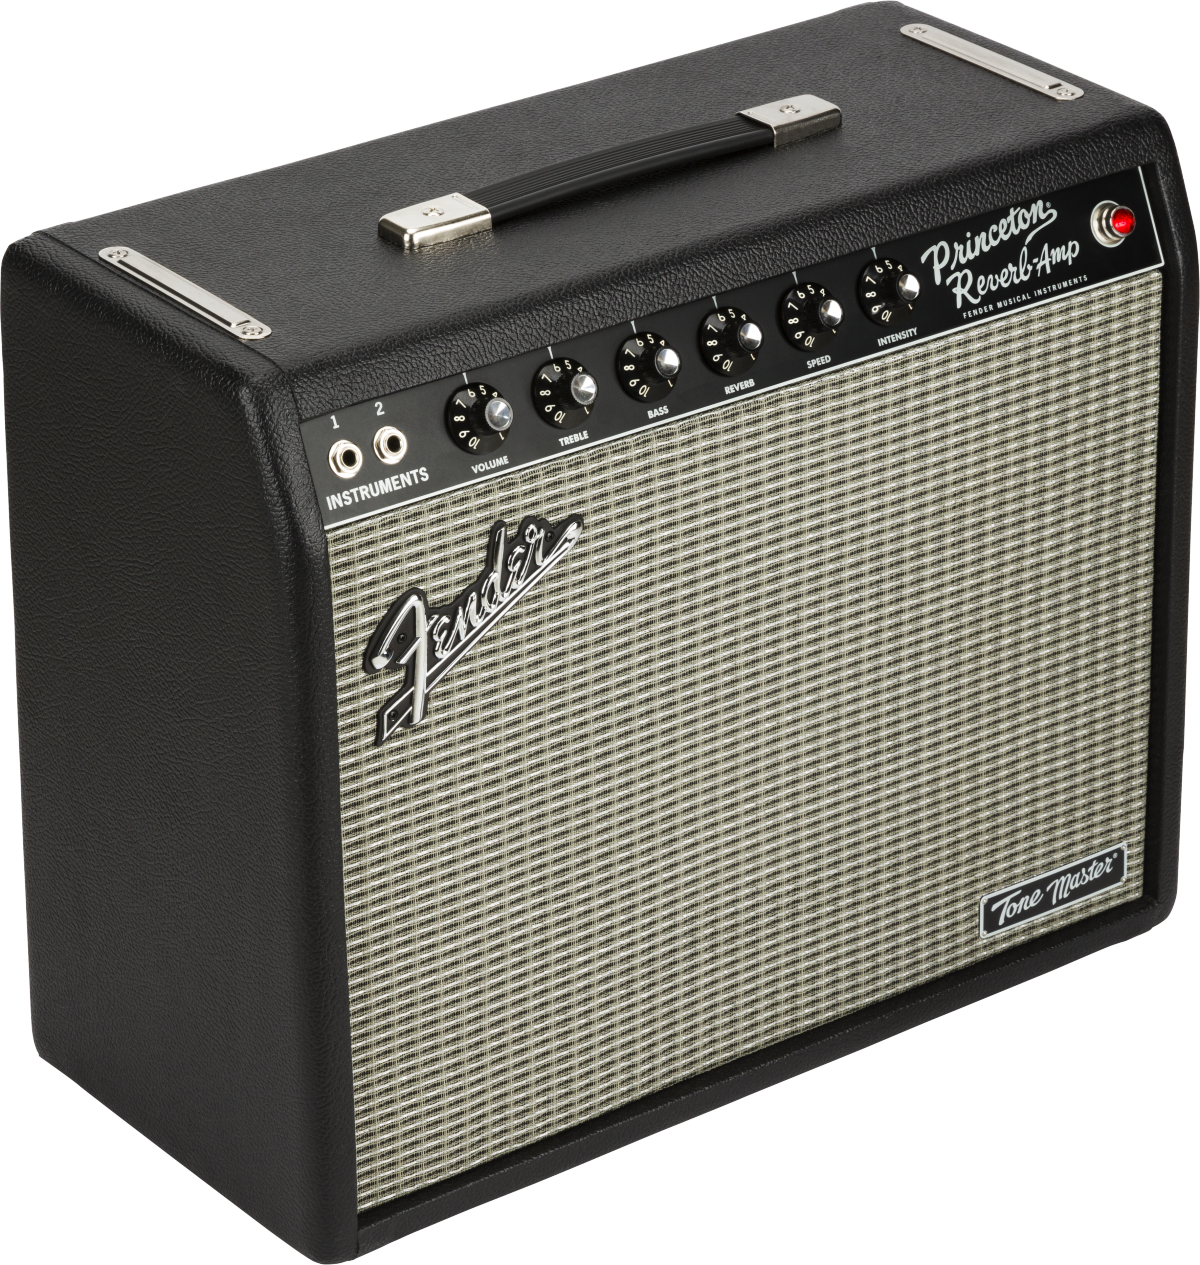 Fender Tone Master® Princeton® Reverb Amplifier